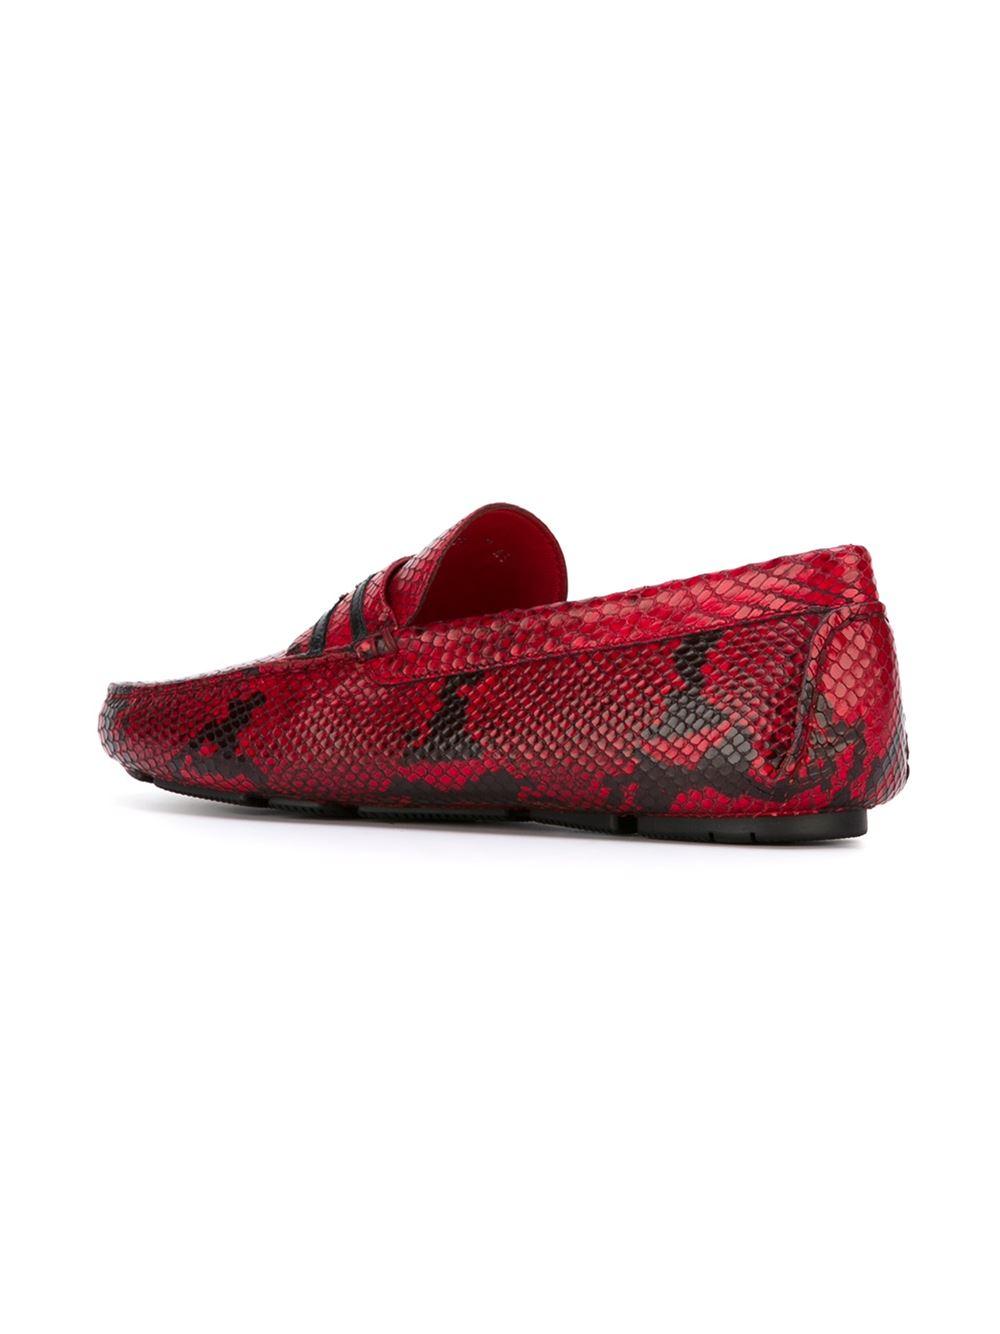 Lyst - Roberto Cavalli Snakeskin Loafers in Red for Men